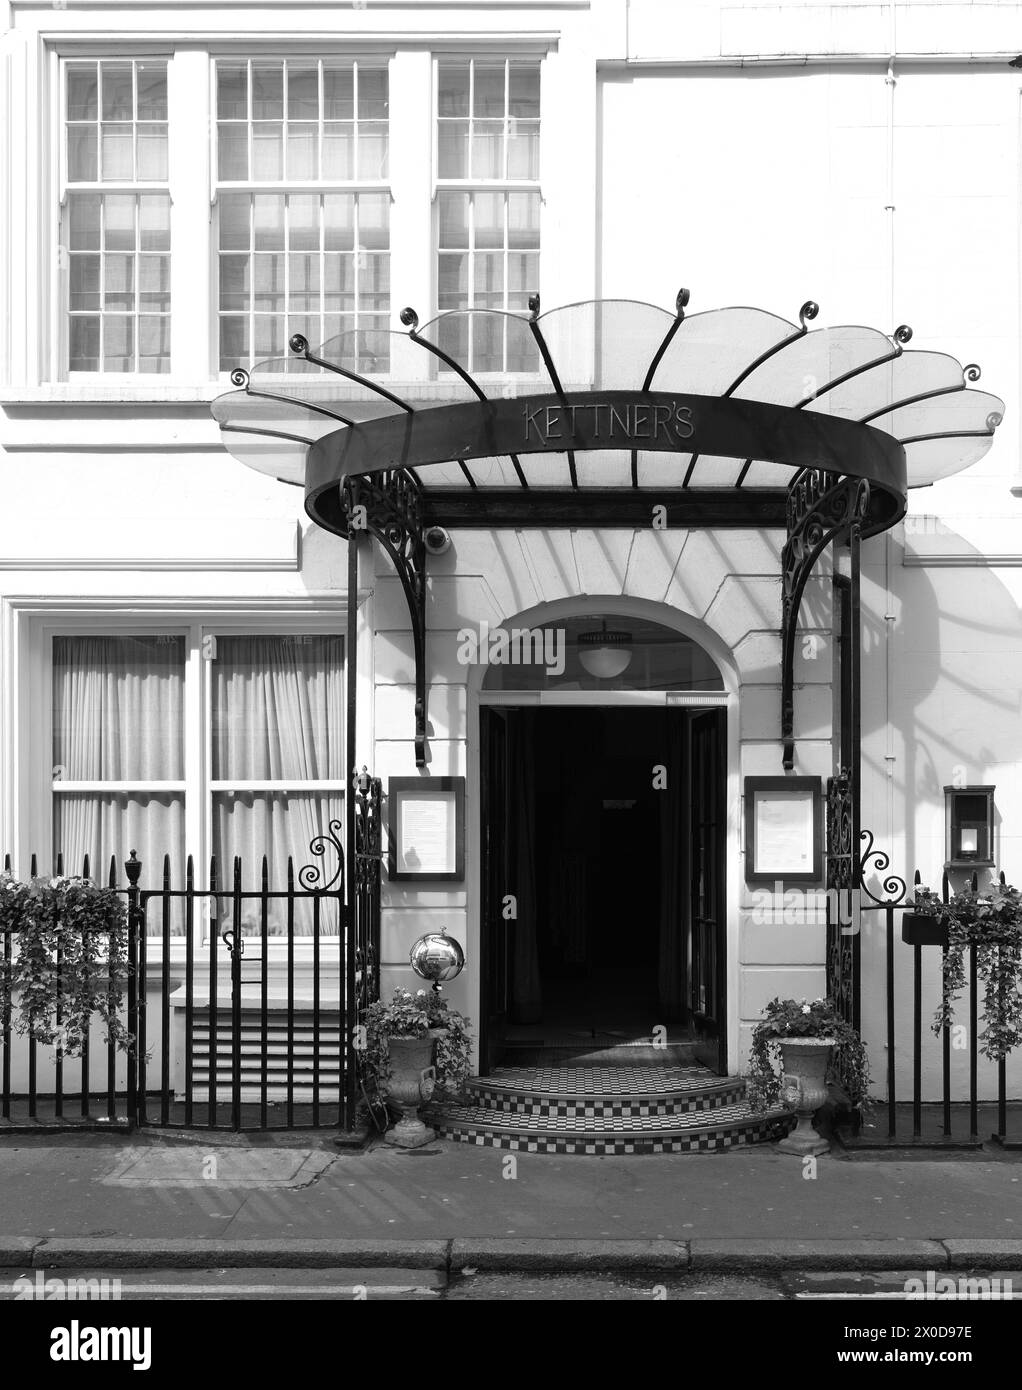 Kettner's Townhouse Restaurant, Champagner Bar und Hotel, Soho, London, England. Stockfoto